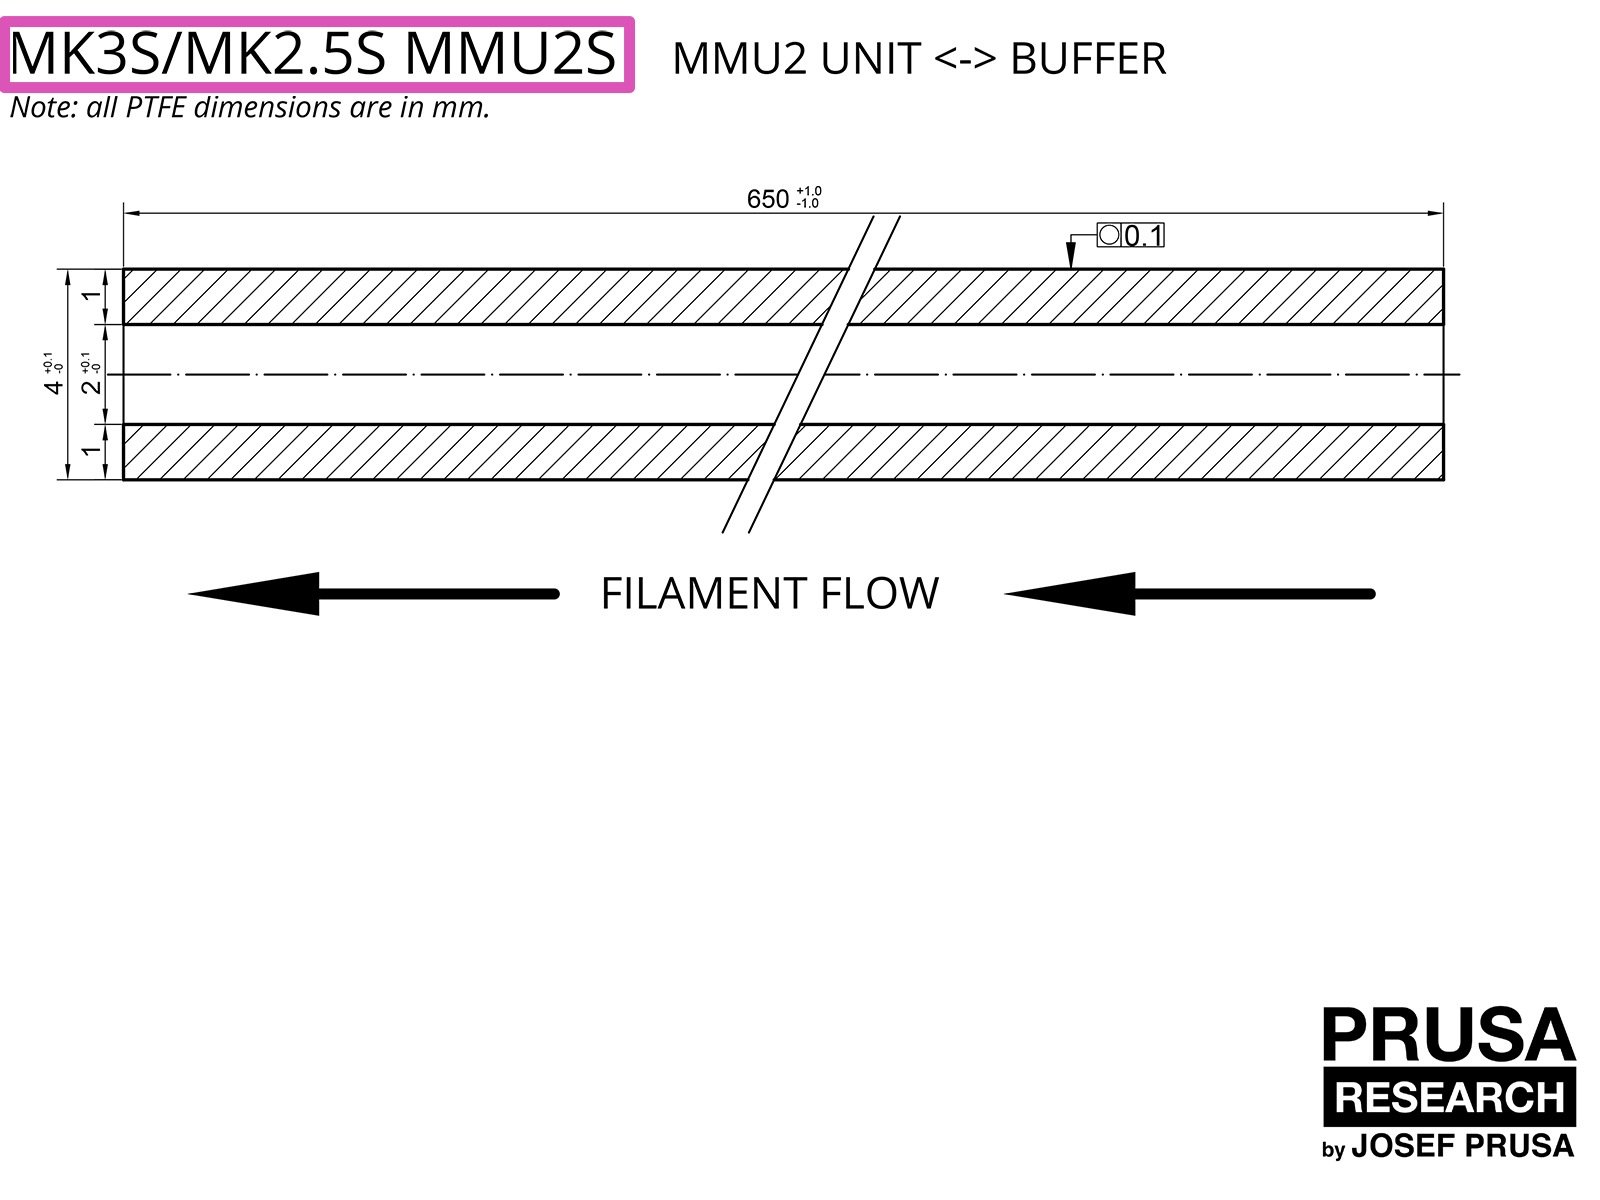 PTFE para la MK3S/MK2.5S MMU2S (parte 2)